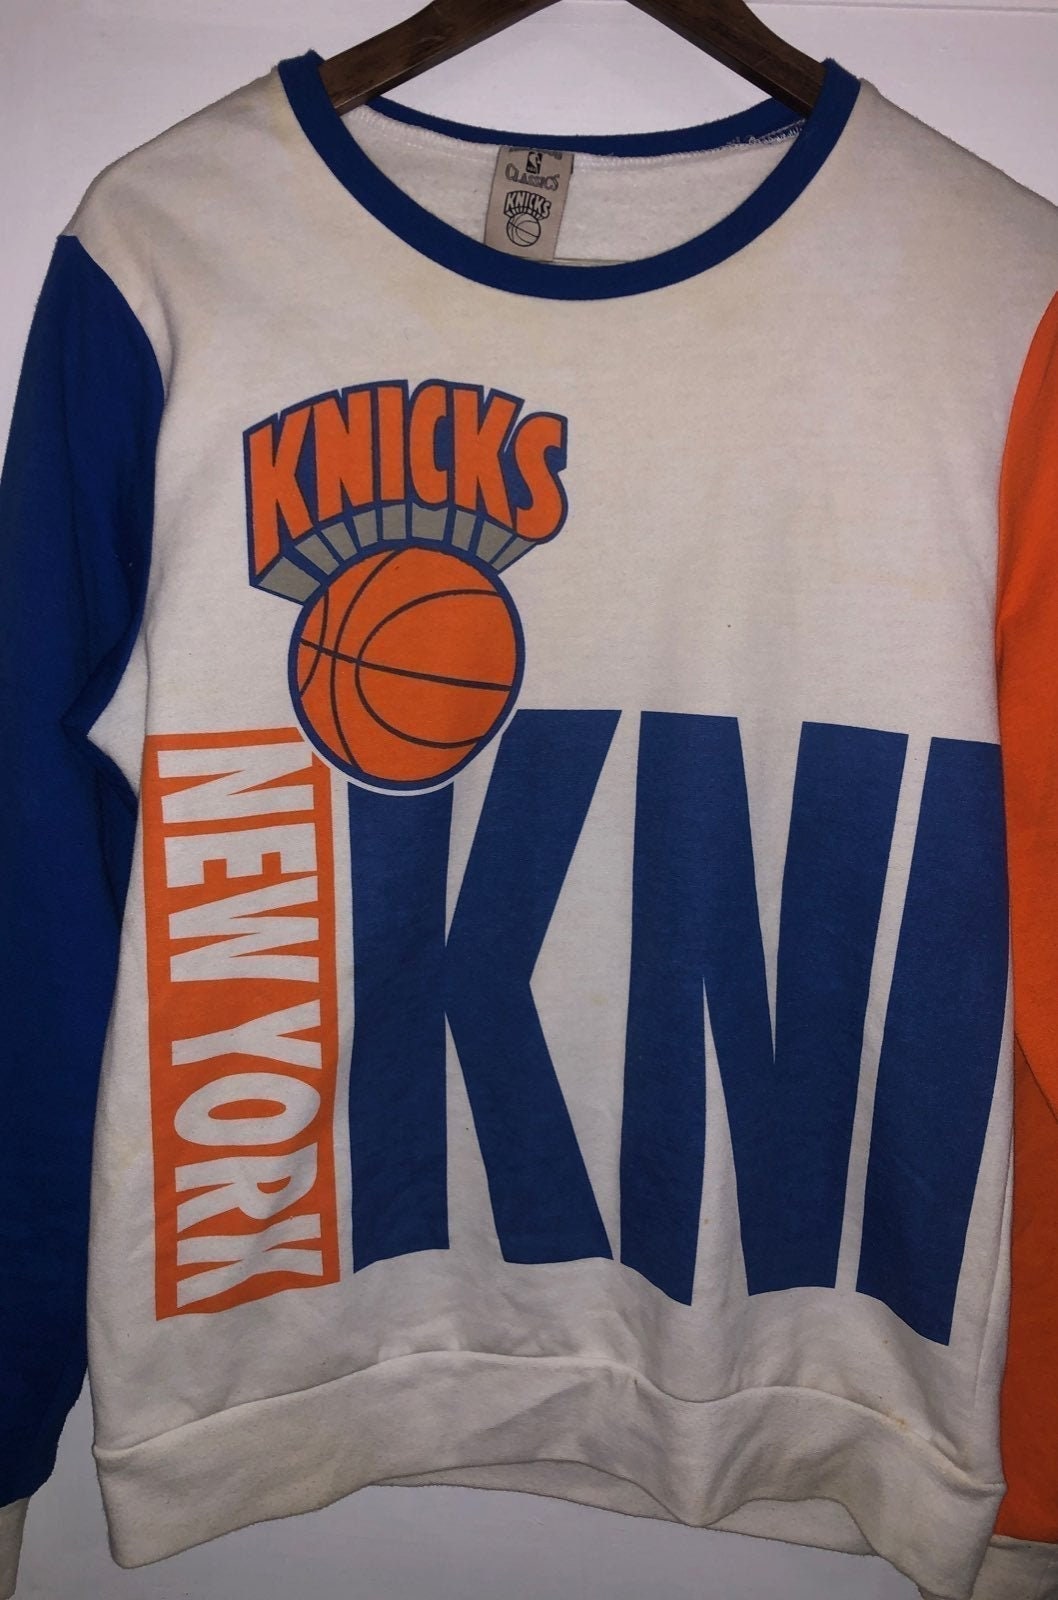 1996 Allan Houston New York Knicks Champion NBA Jersey Size 44